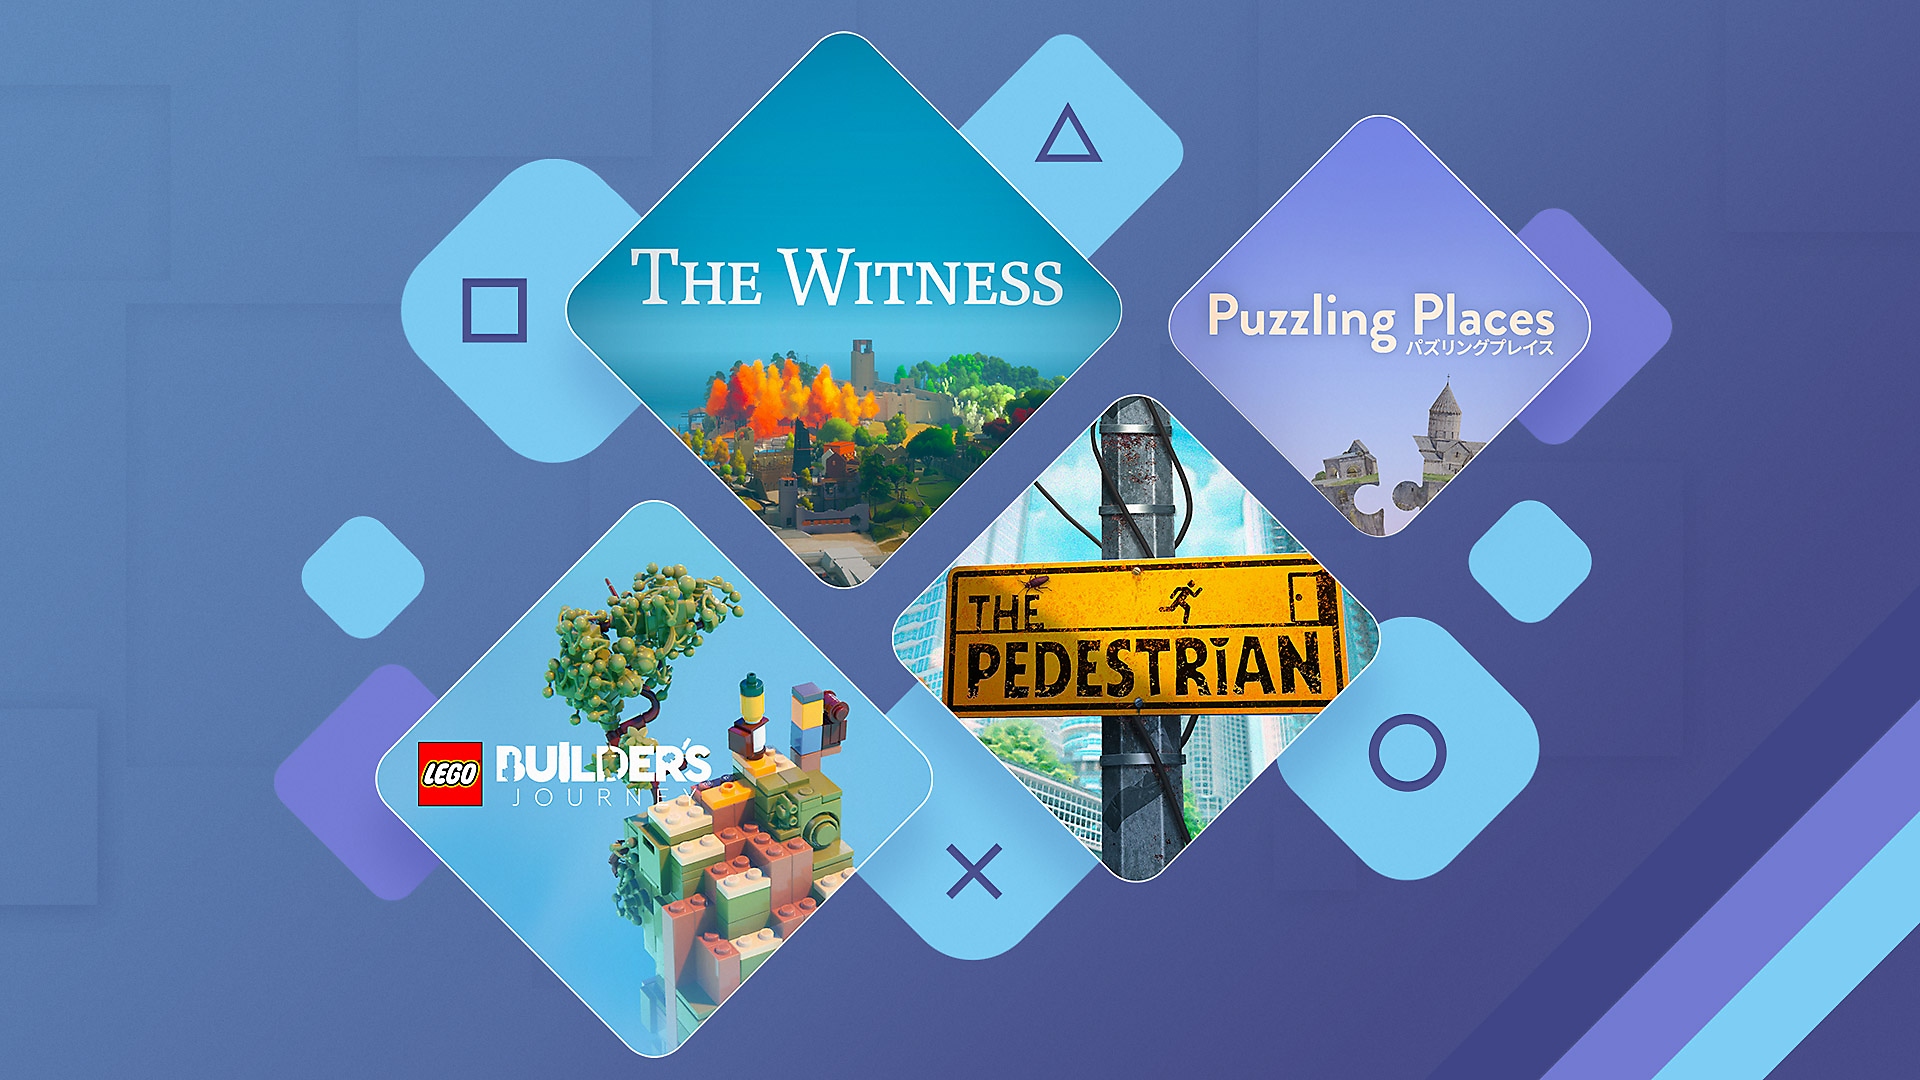 PS4とPS5で楽しめるおすすめのパズルゲーム 『The Witness』、『Ghost Giant』、『レゴ ビルダーズ・ジャーニー』、『THE PEDESTRIAN』のプロモーションアートワーク